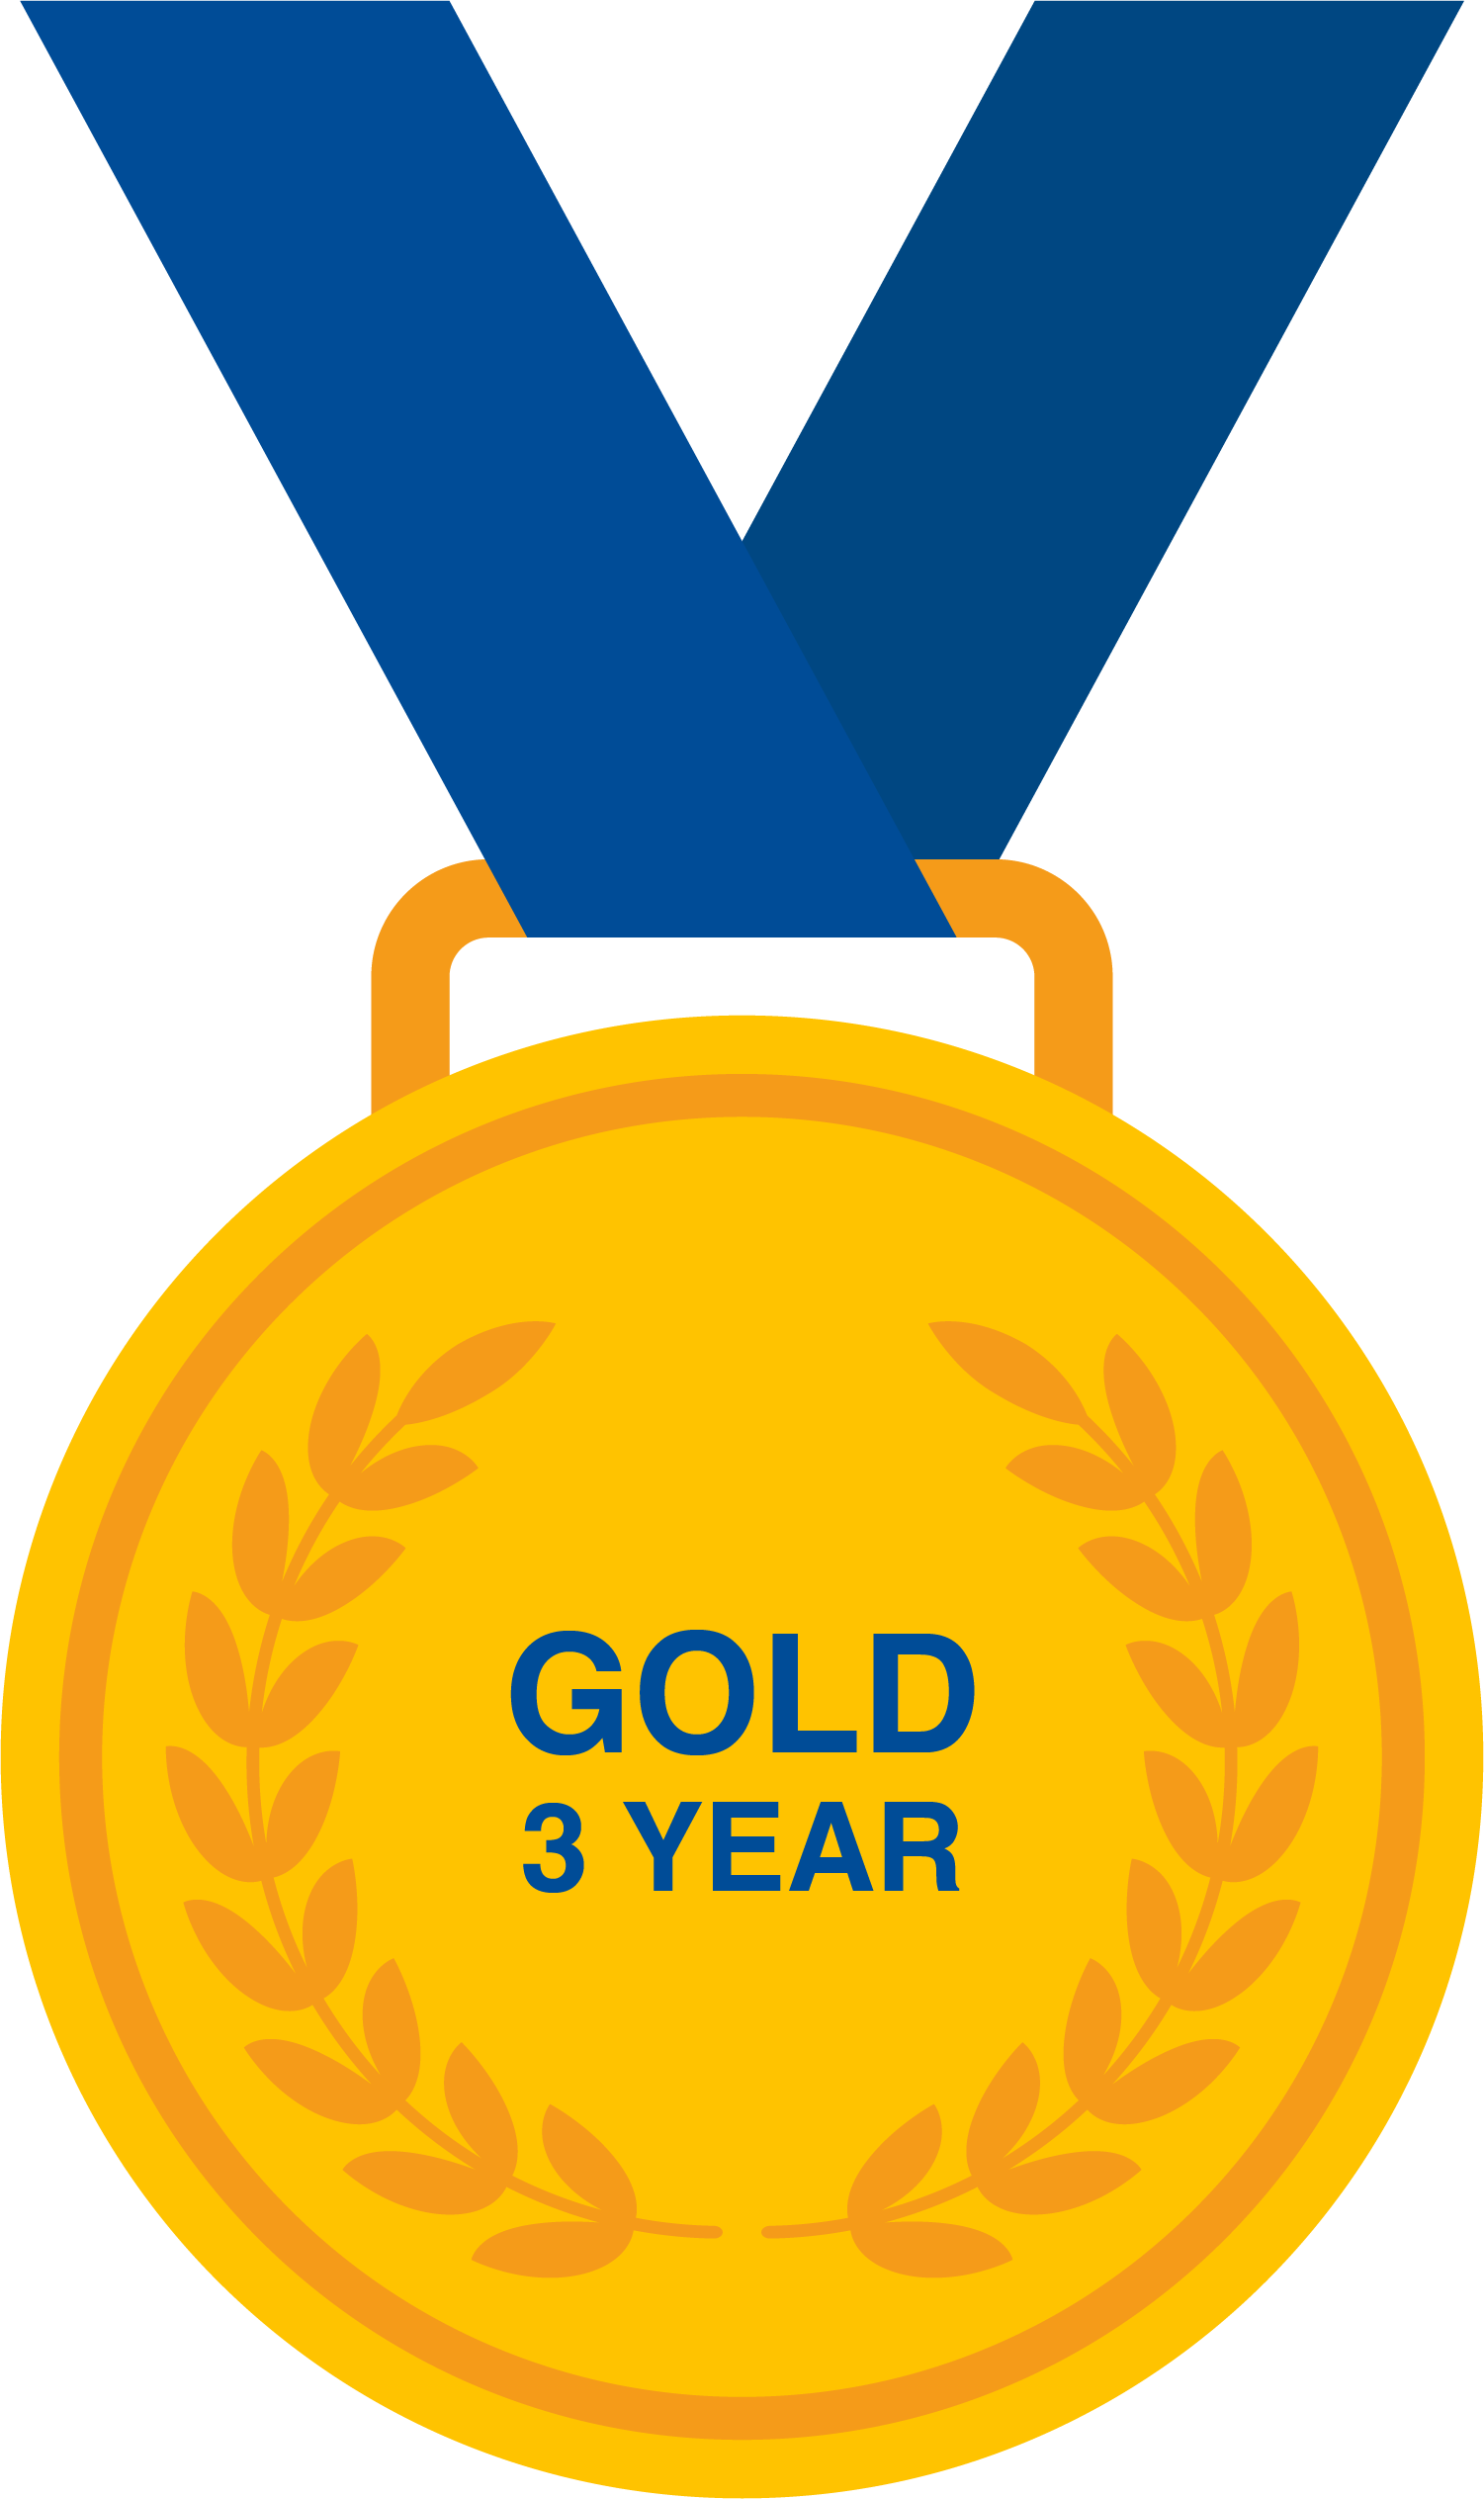 Gold - 3 Year